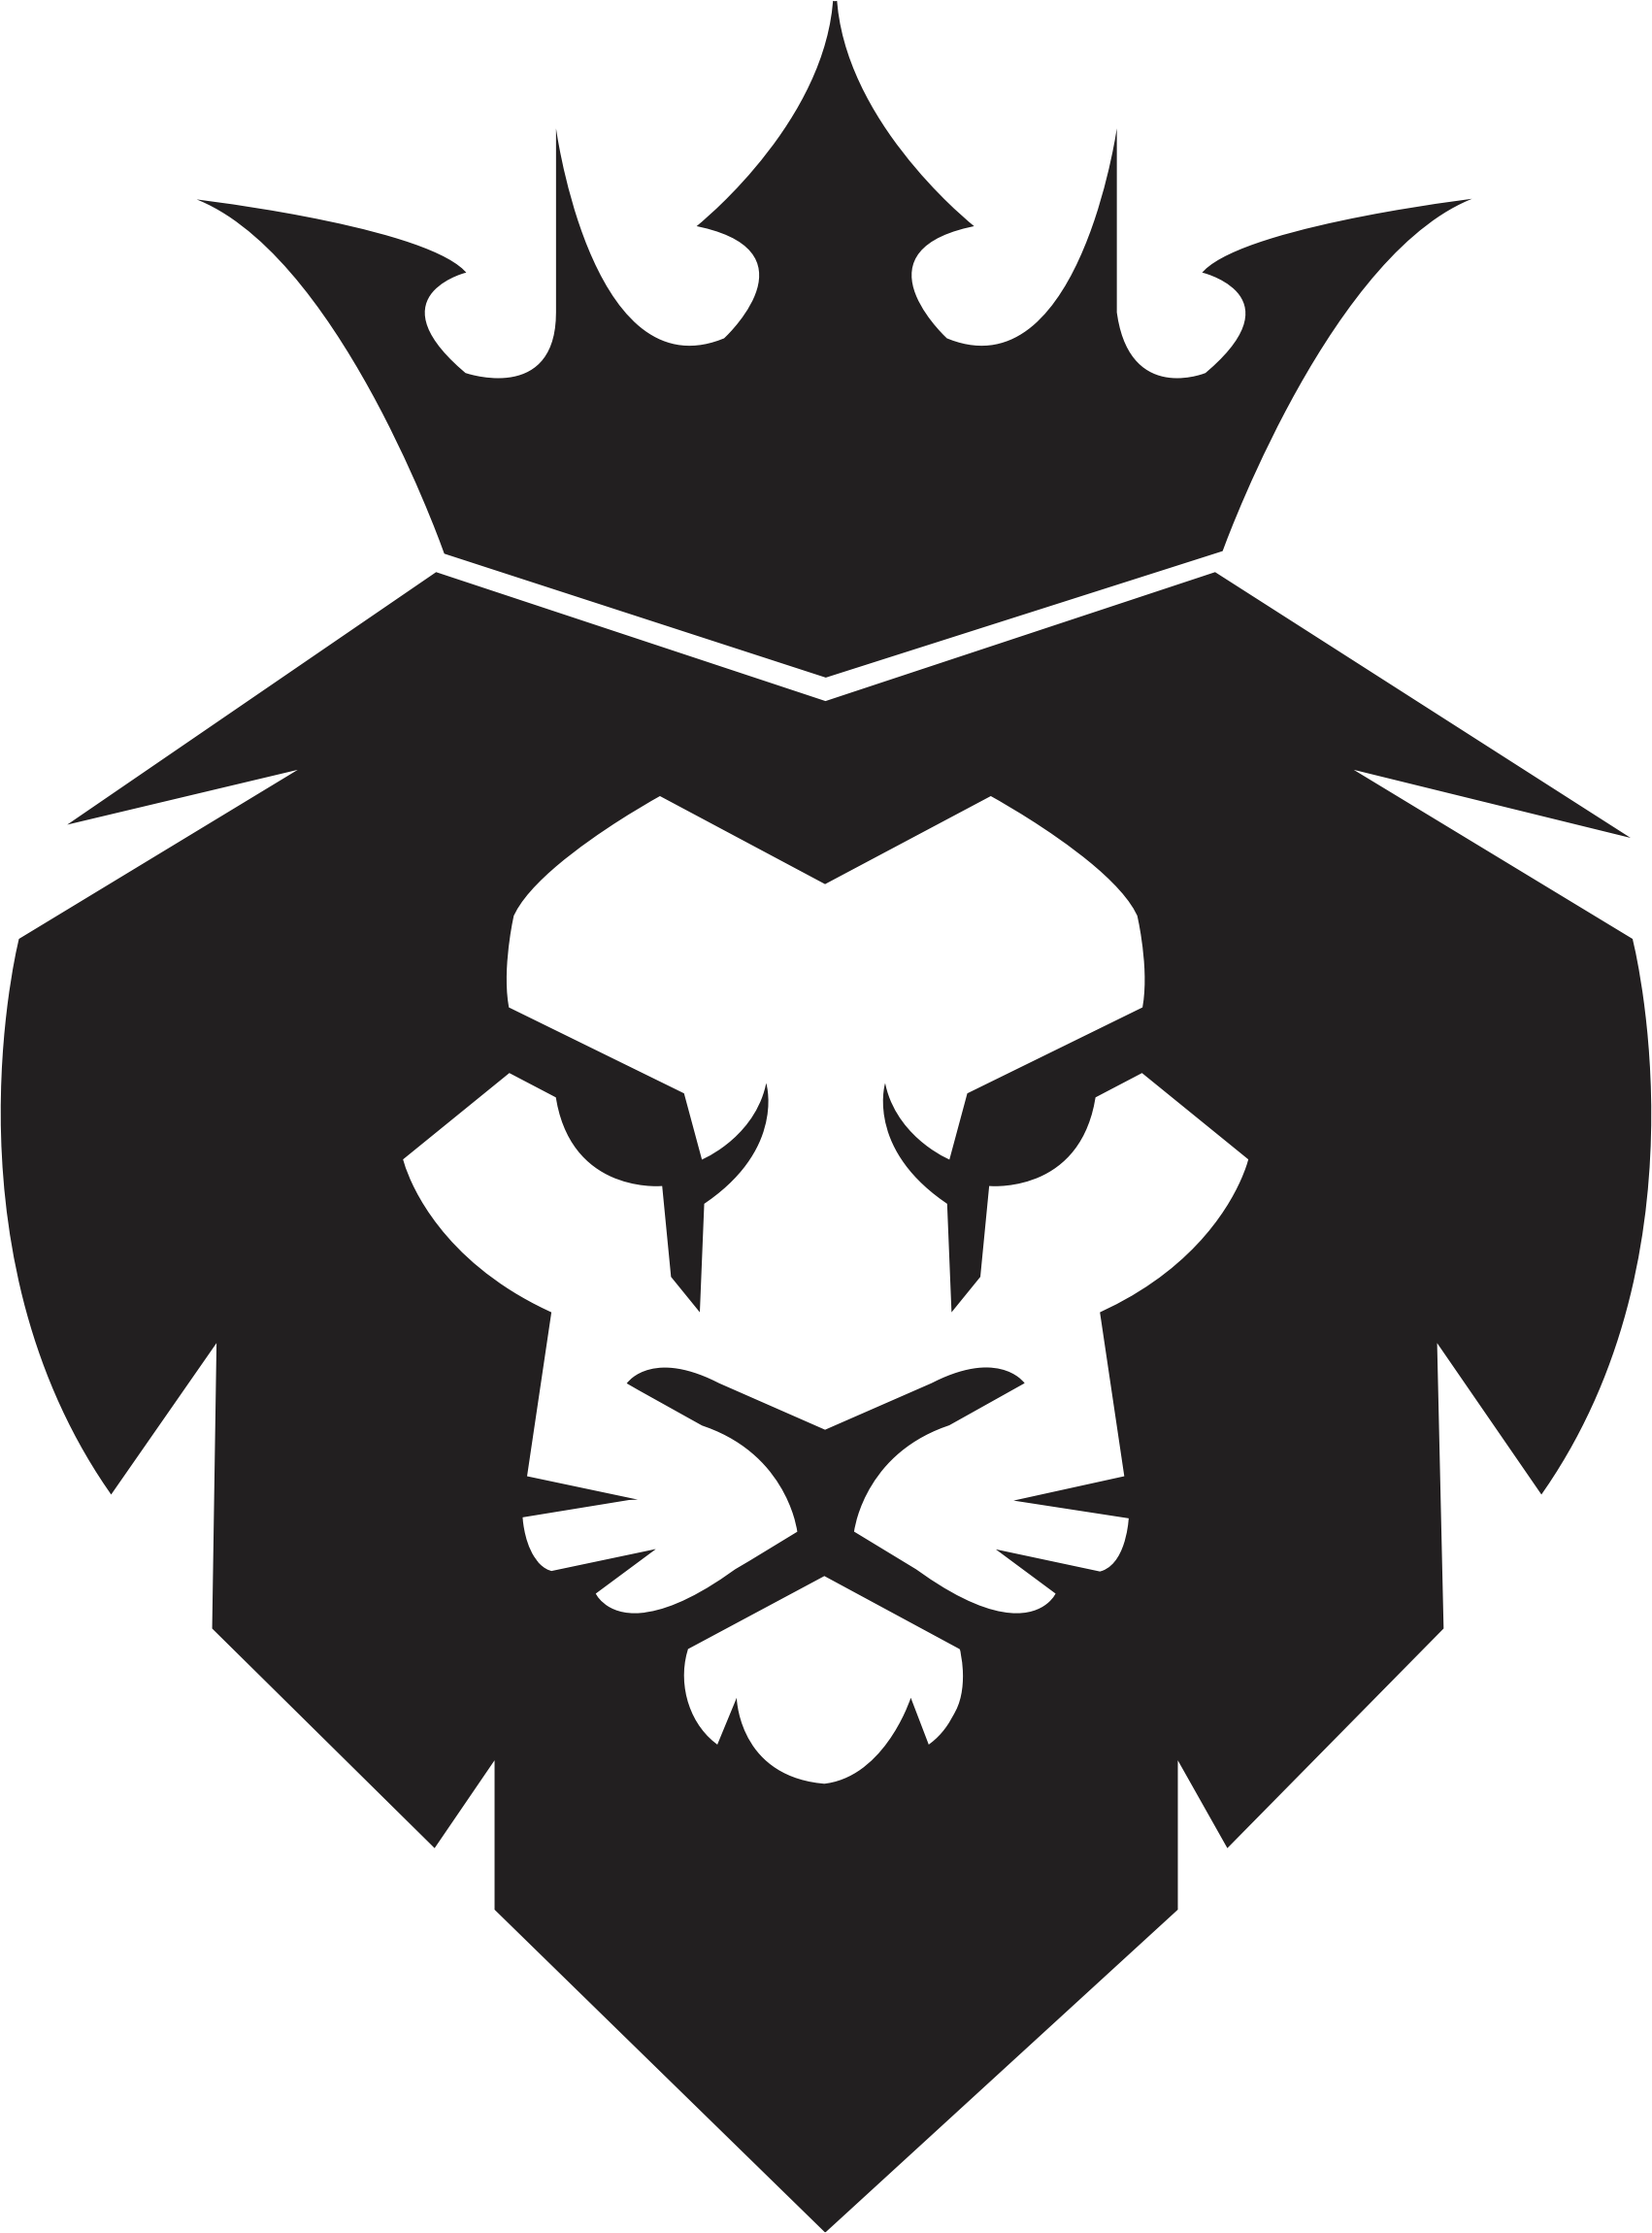 King clipart lion symbol, King lion symbol Transparent ...